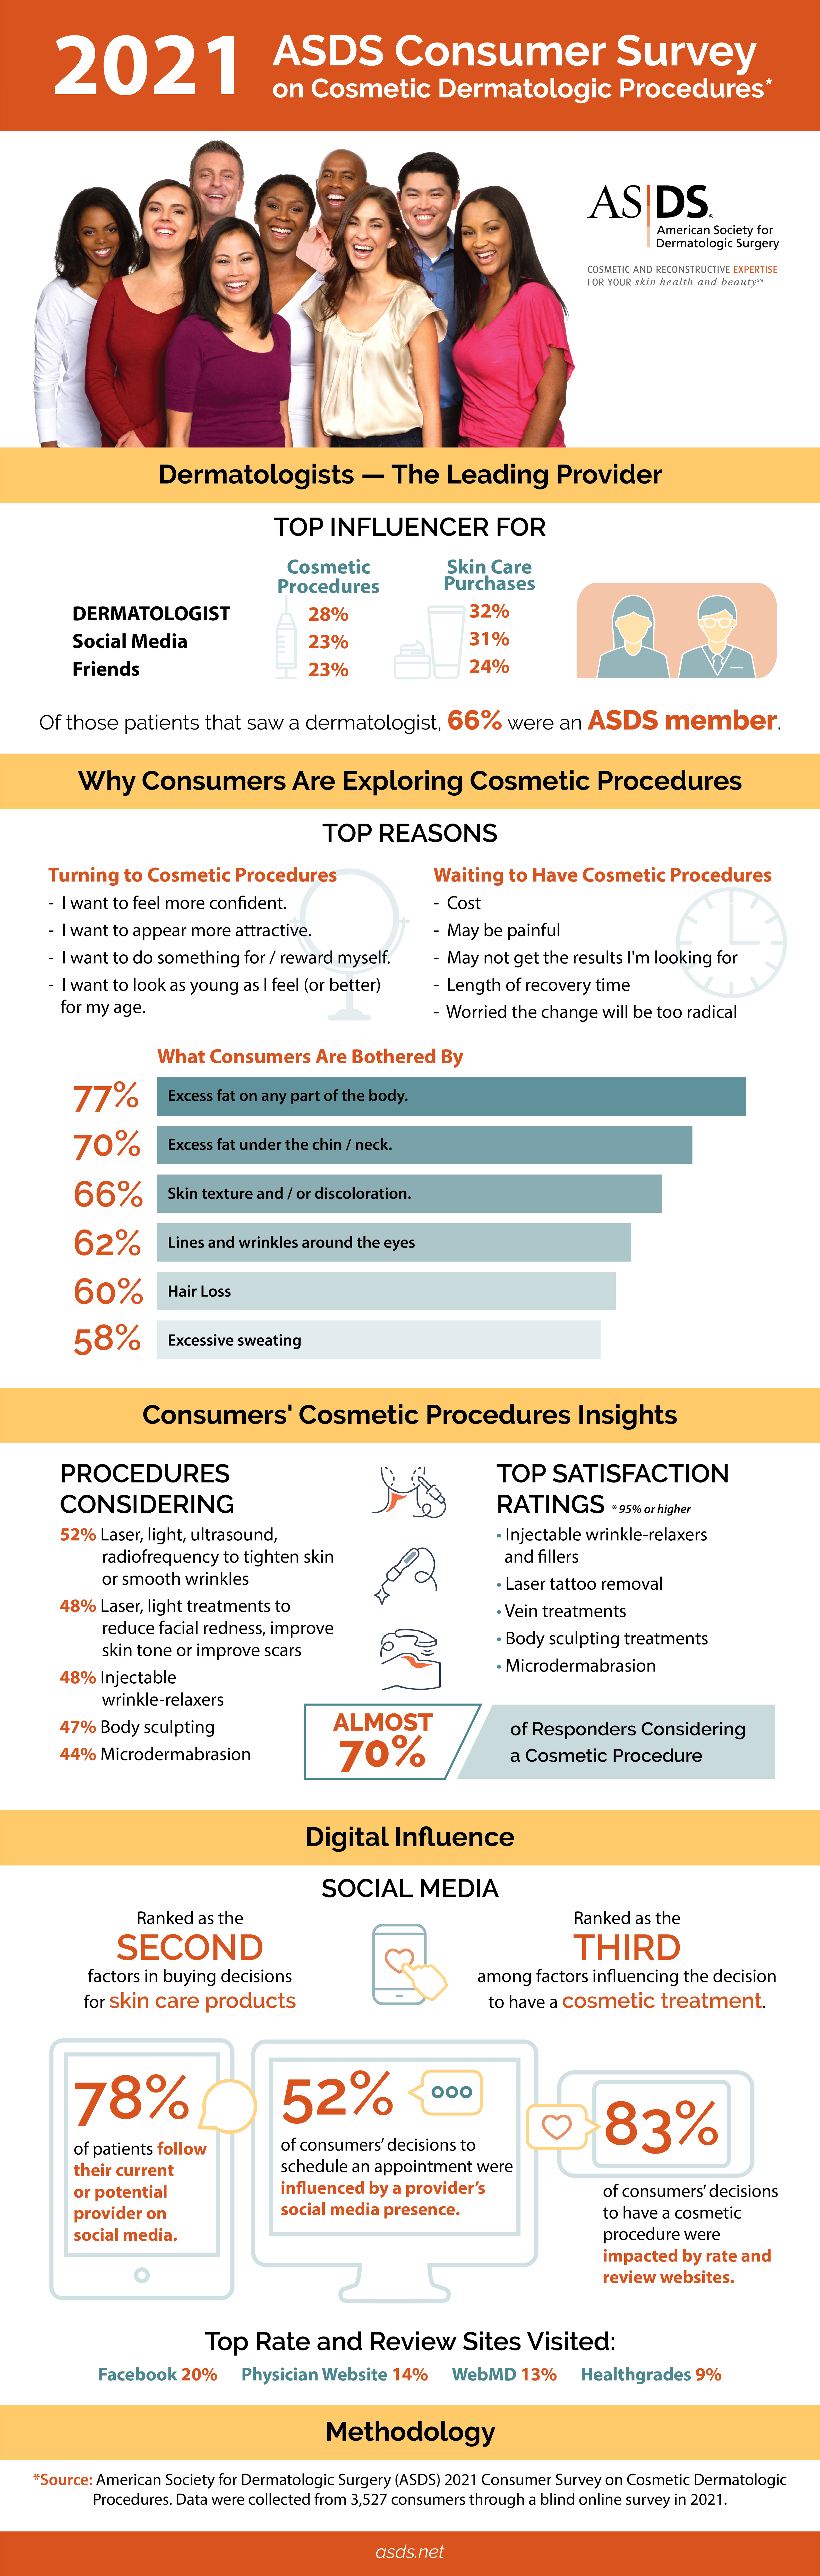 2021 ASDS Consumer Survey on Cosmetic Dermatologic Procedures Infographic